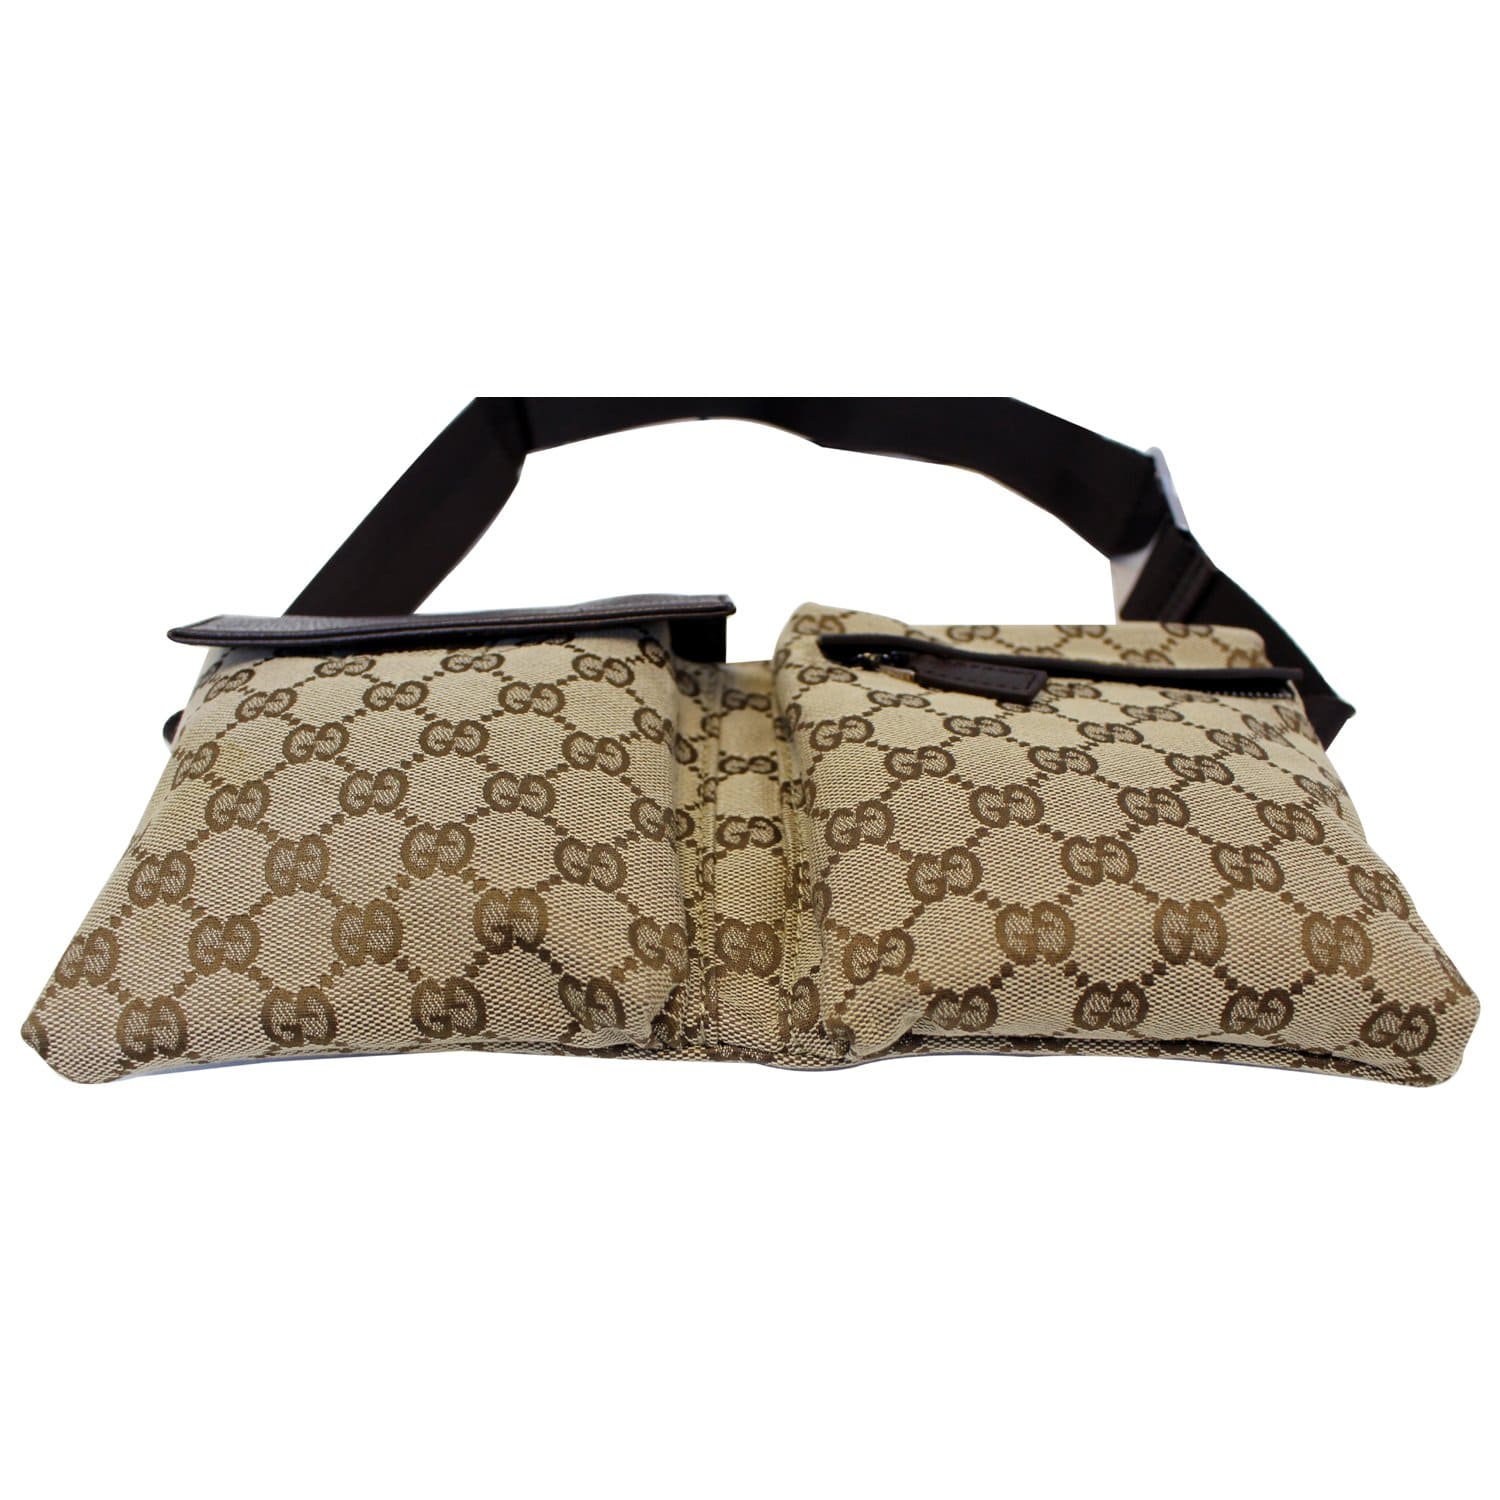 Gucci GG Monogram Waist Bum Bag Brown - Gucci Handbags